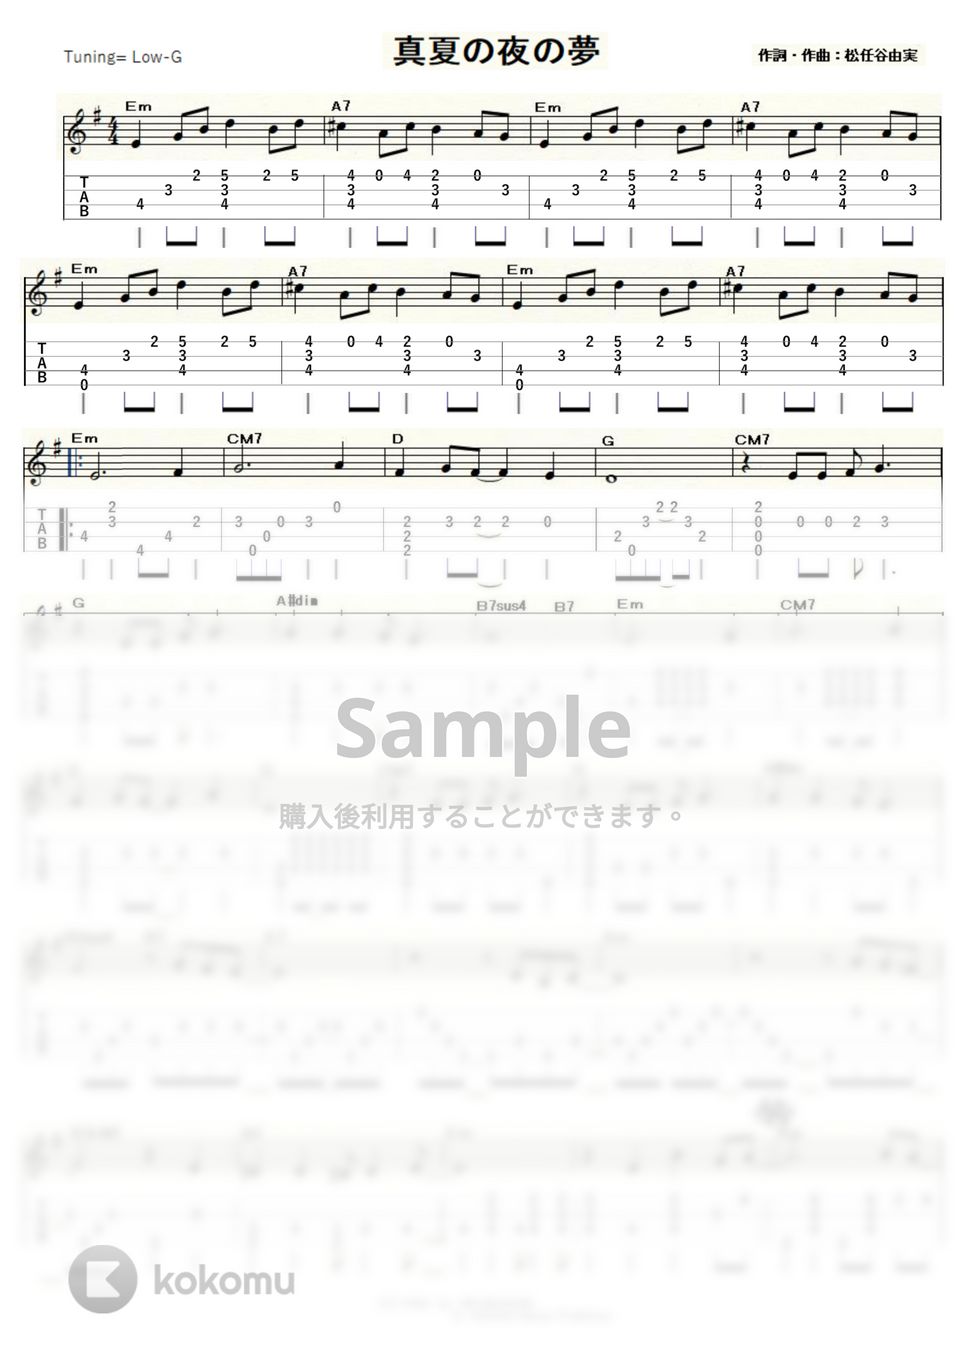 松任谷由実 - 真夏の夜の夢 (ｳｸﾚﾚｿﾛ / Low-G / 上級) by ukulelepapa